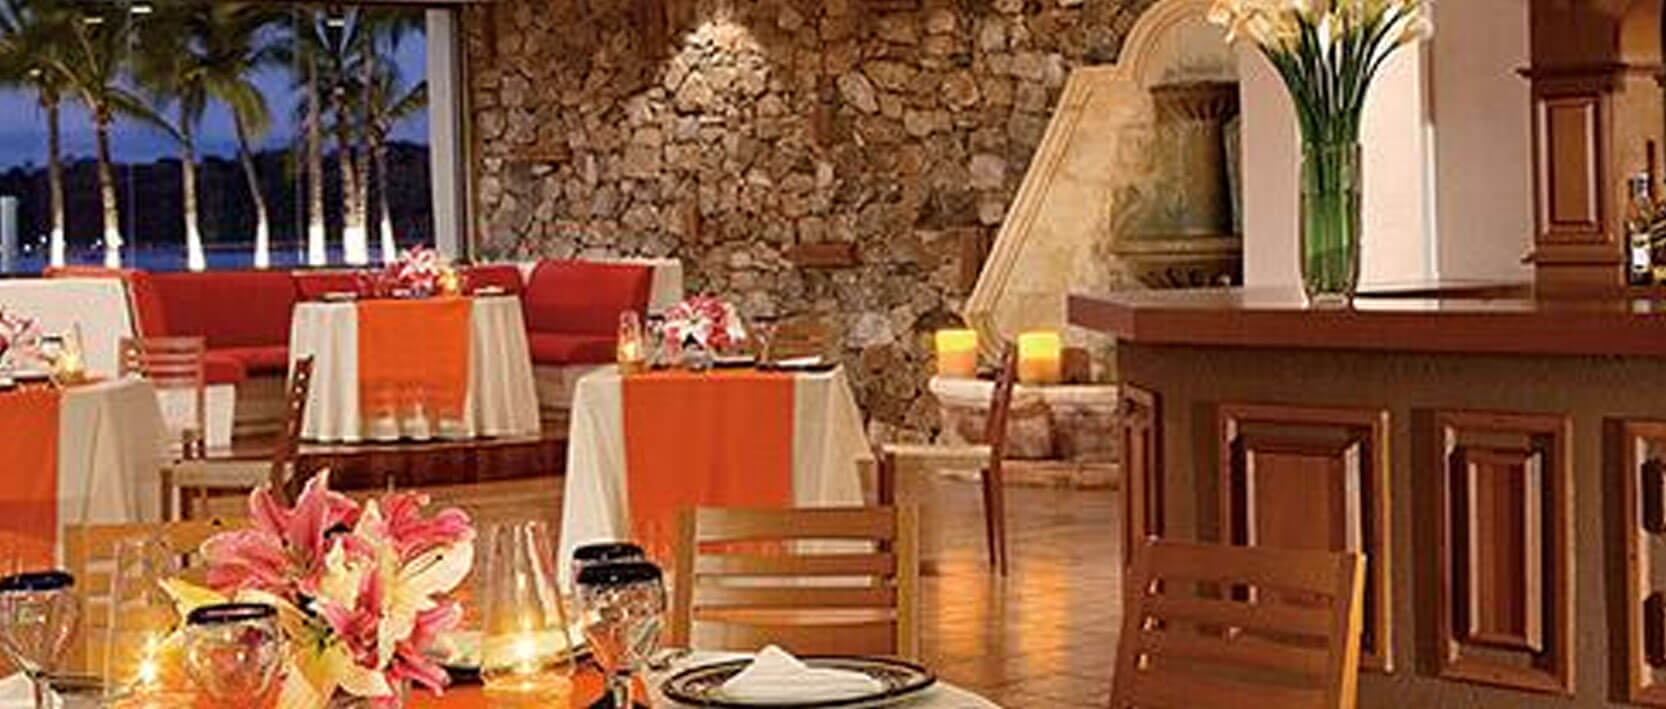 Dreams Huatulco Resort Restaurants and Bars - El Patio